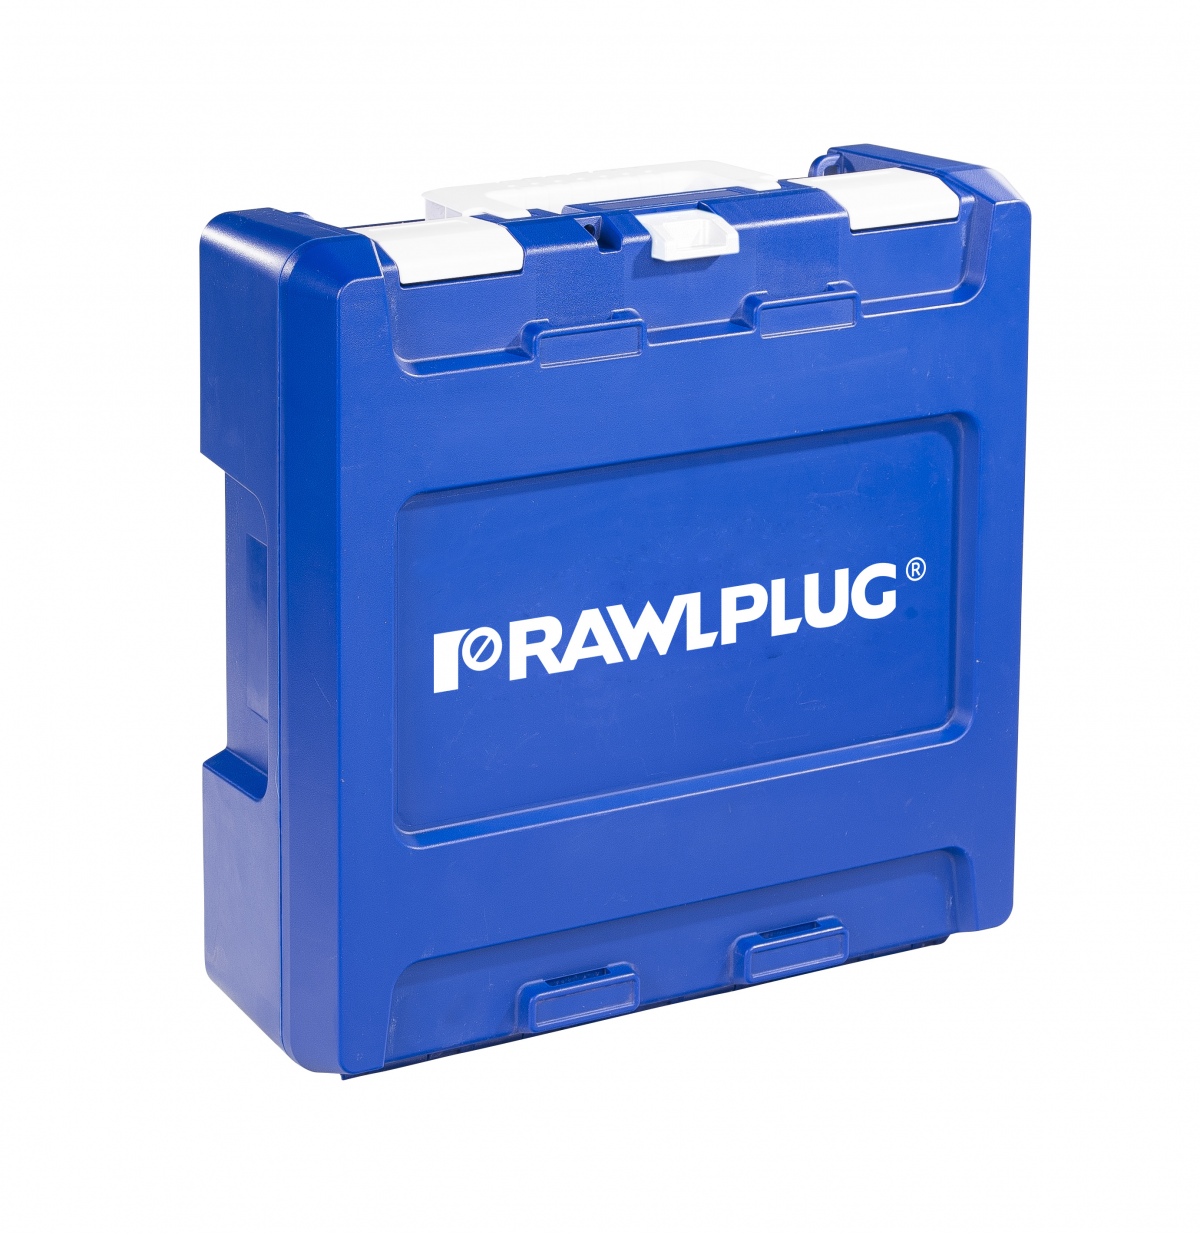 R-PDS18-S Akumulatorowa wkrętarka akumulatorowa RawlDriver 18V, w walizce transportowej